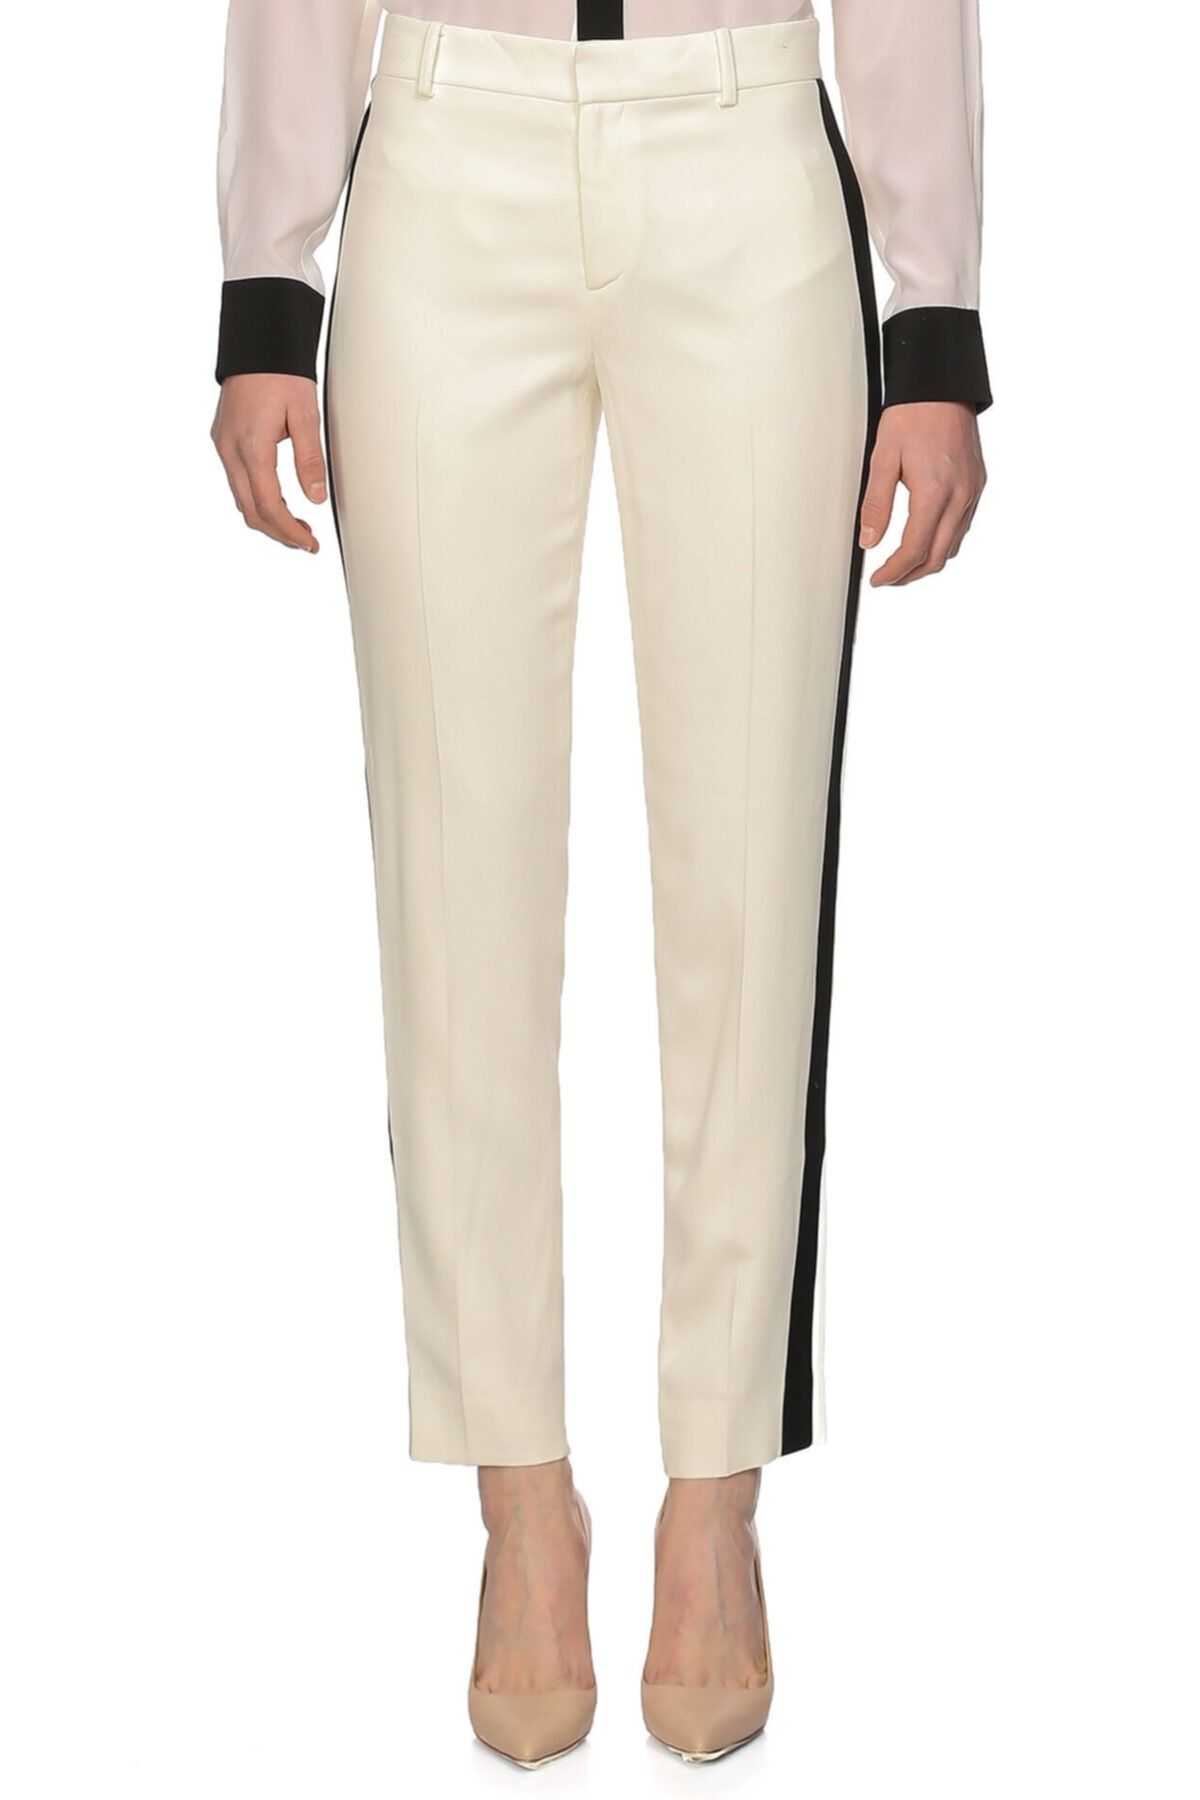 Ralph Lauren Beyaz Pantolon